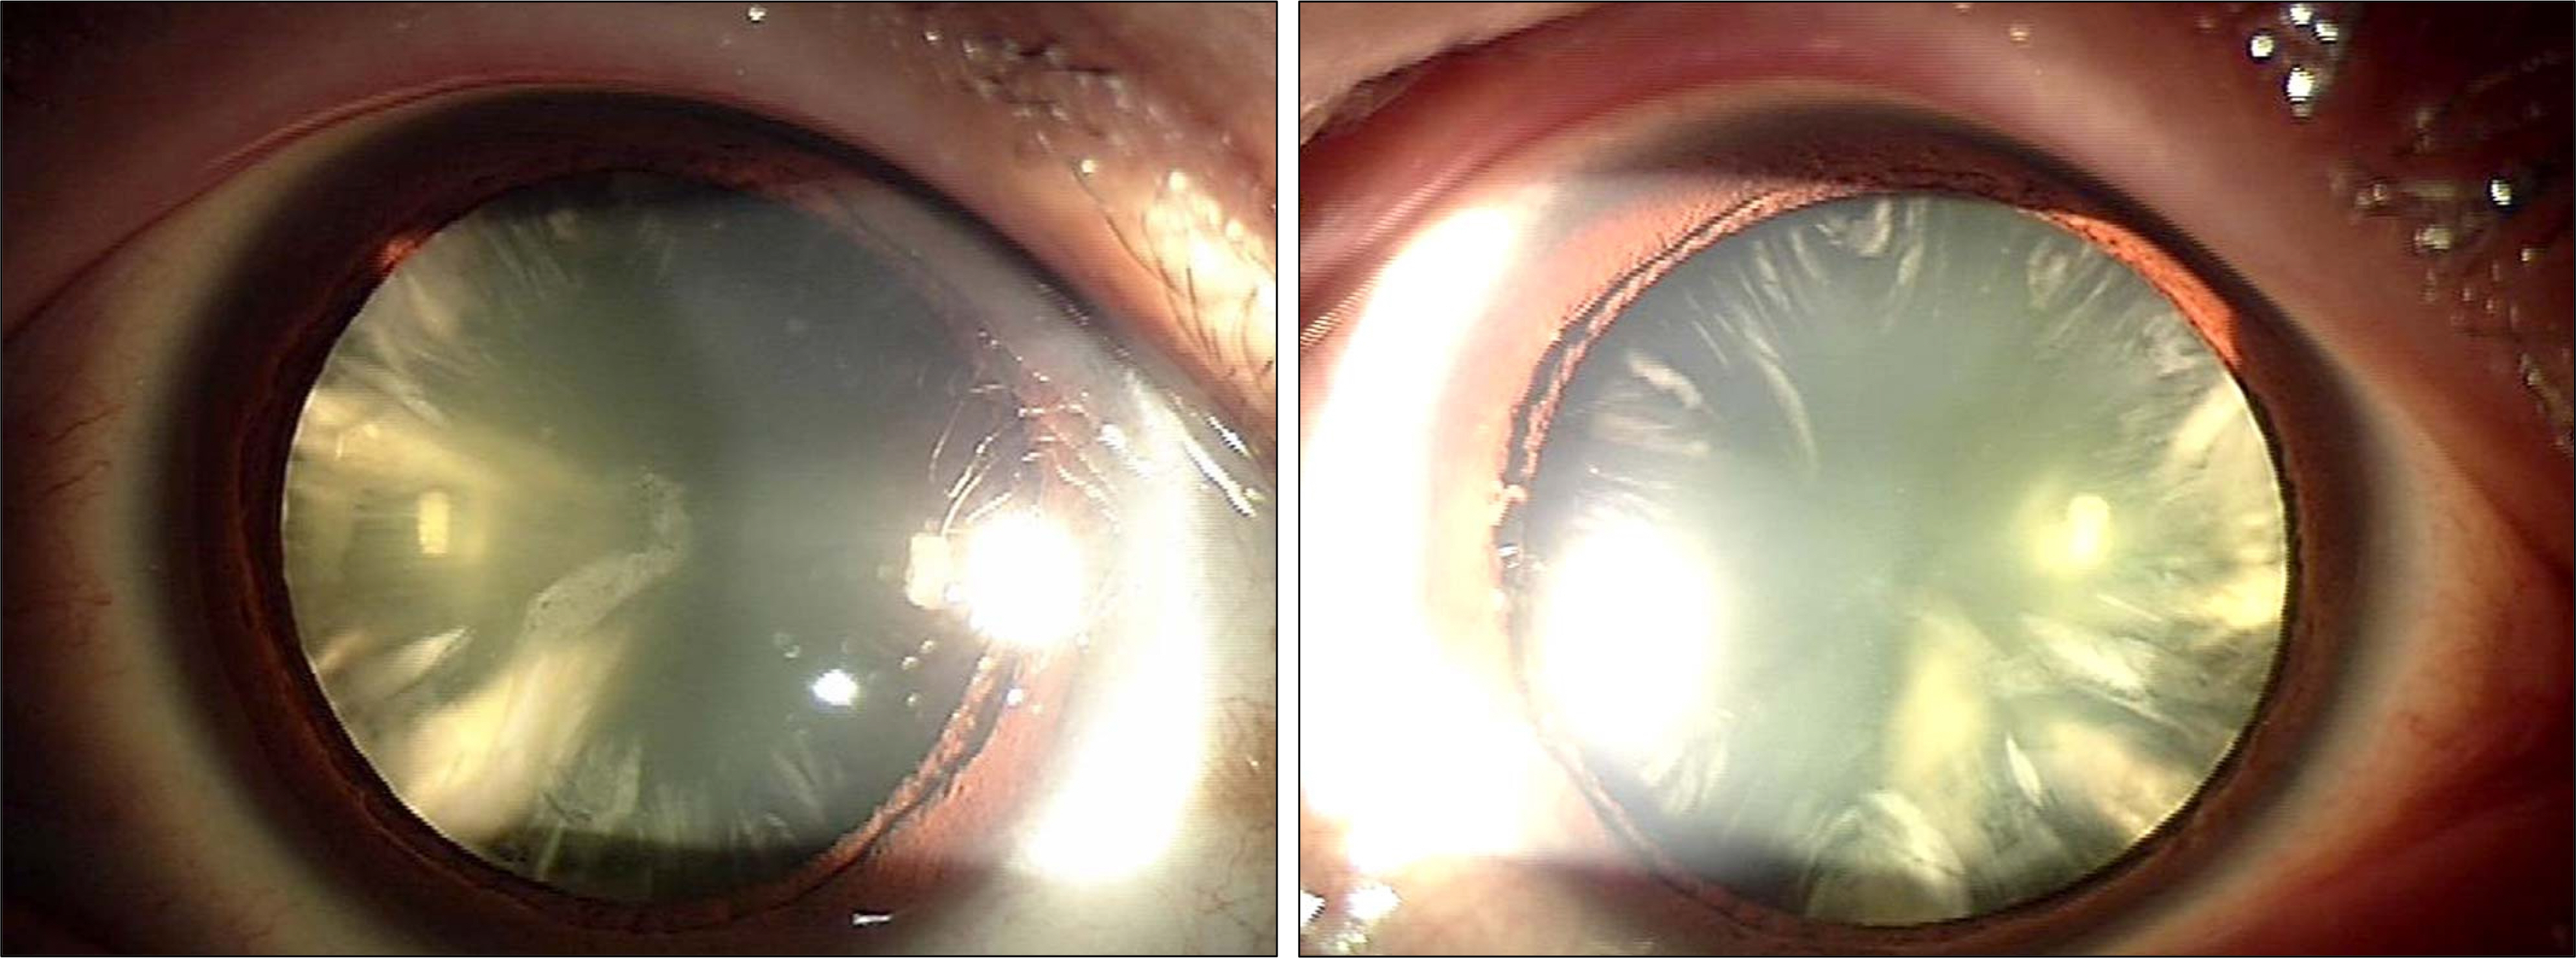 anterior capsular cataract